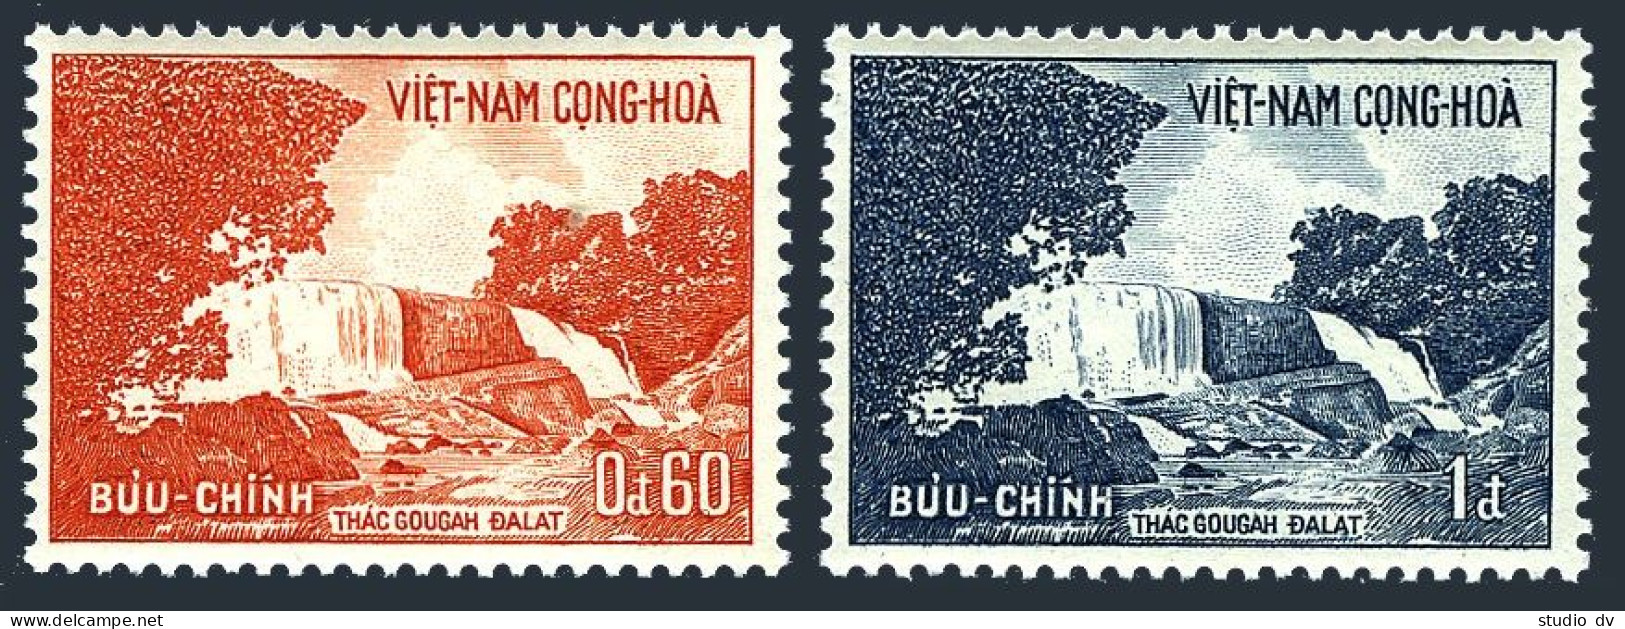 Viet Nam South 201-202, MNH. Michel 278-279. Gougah Waterfall, Dalat, 1963. - Vietnam